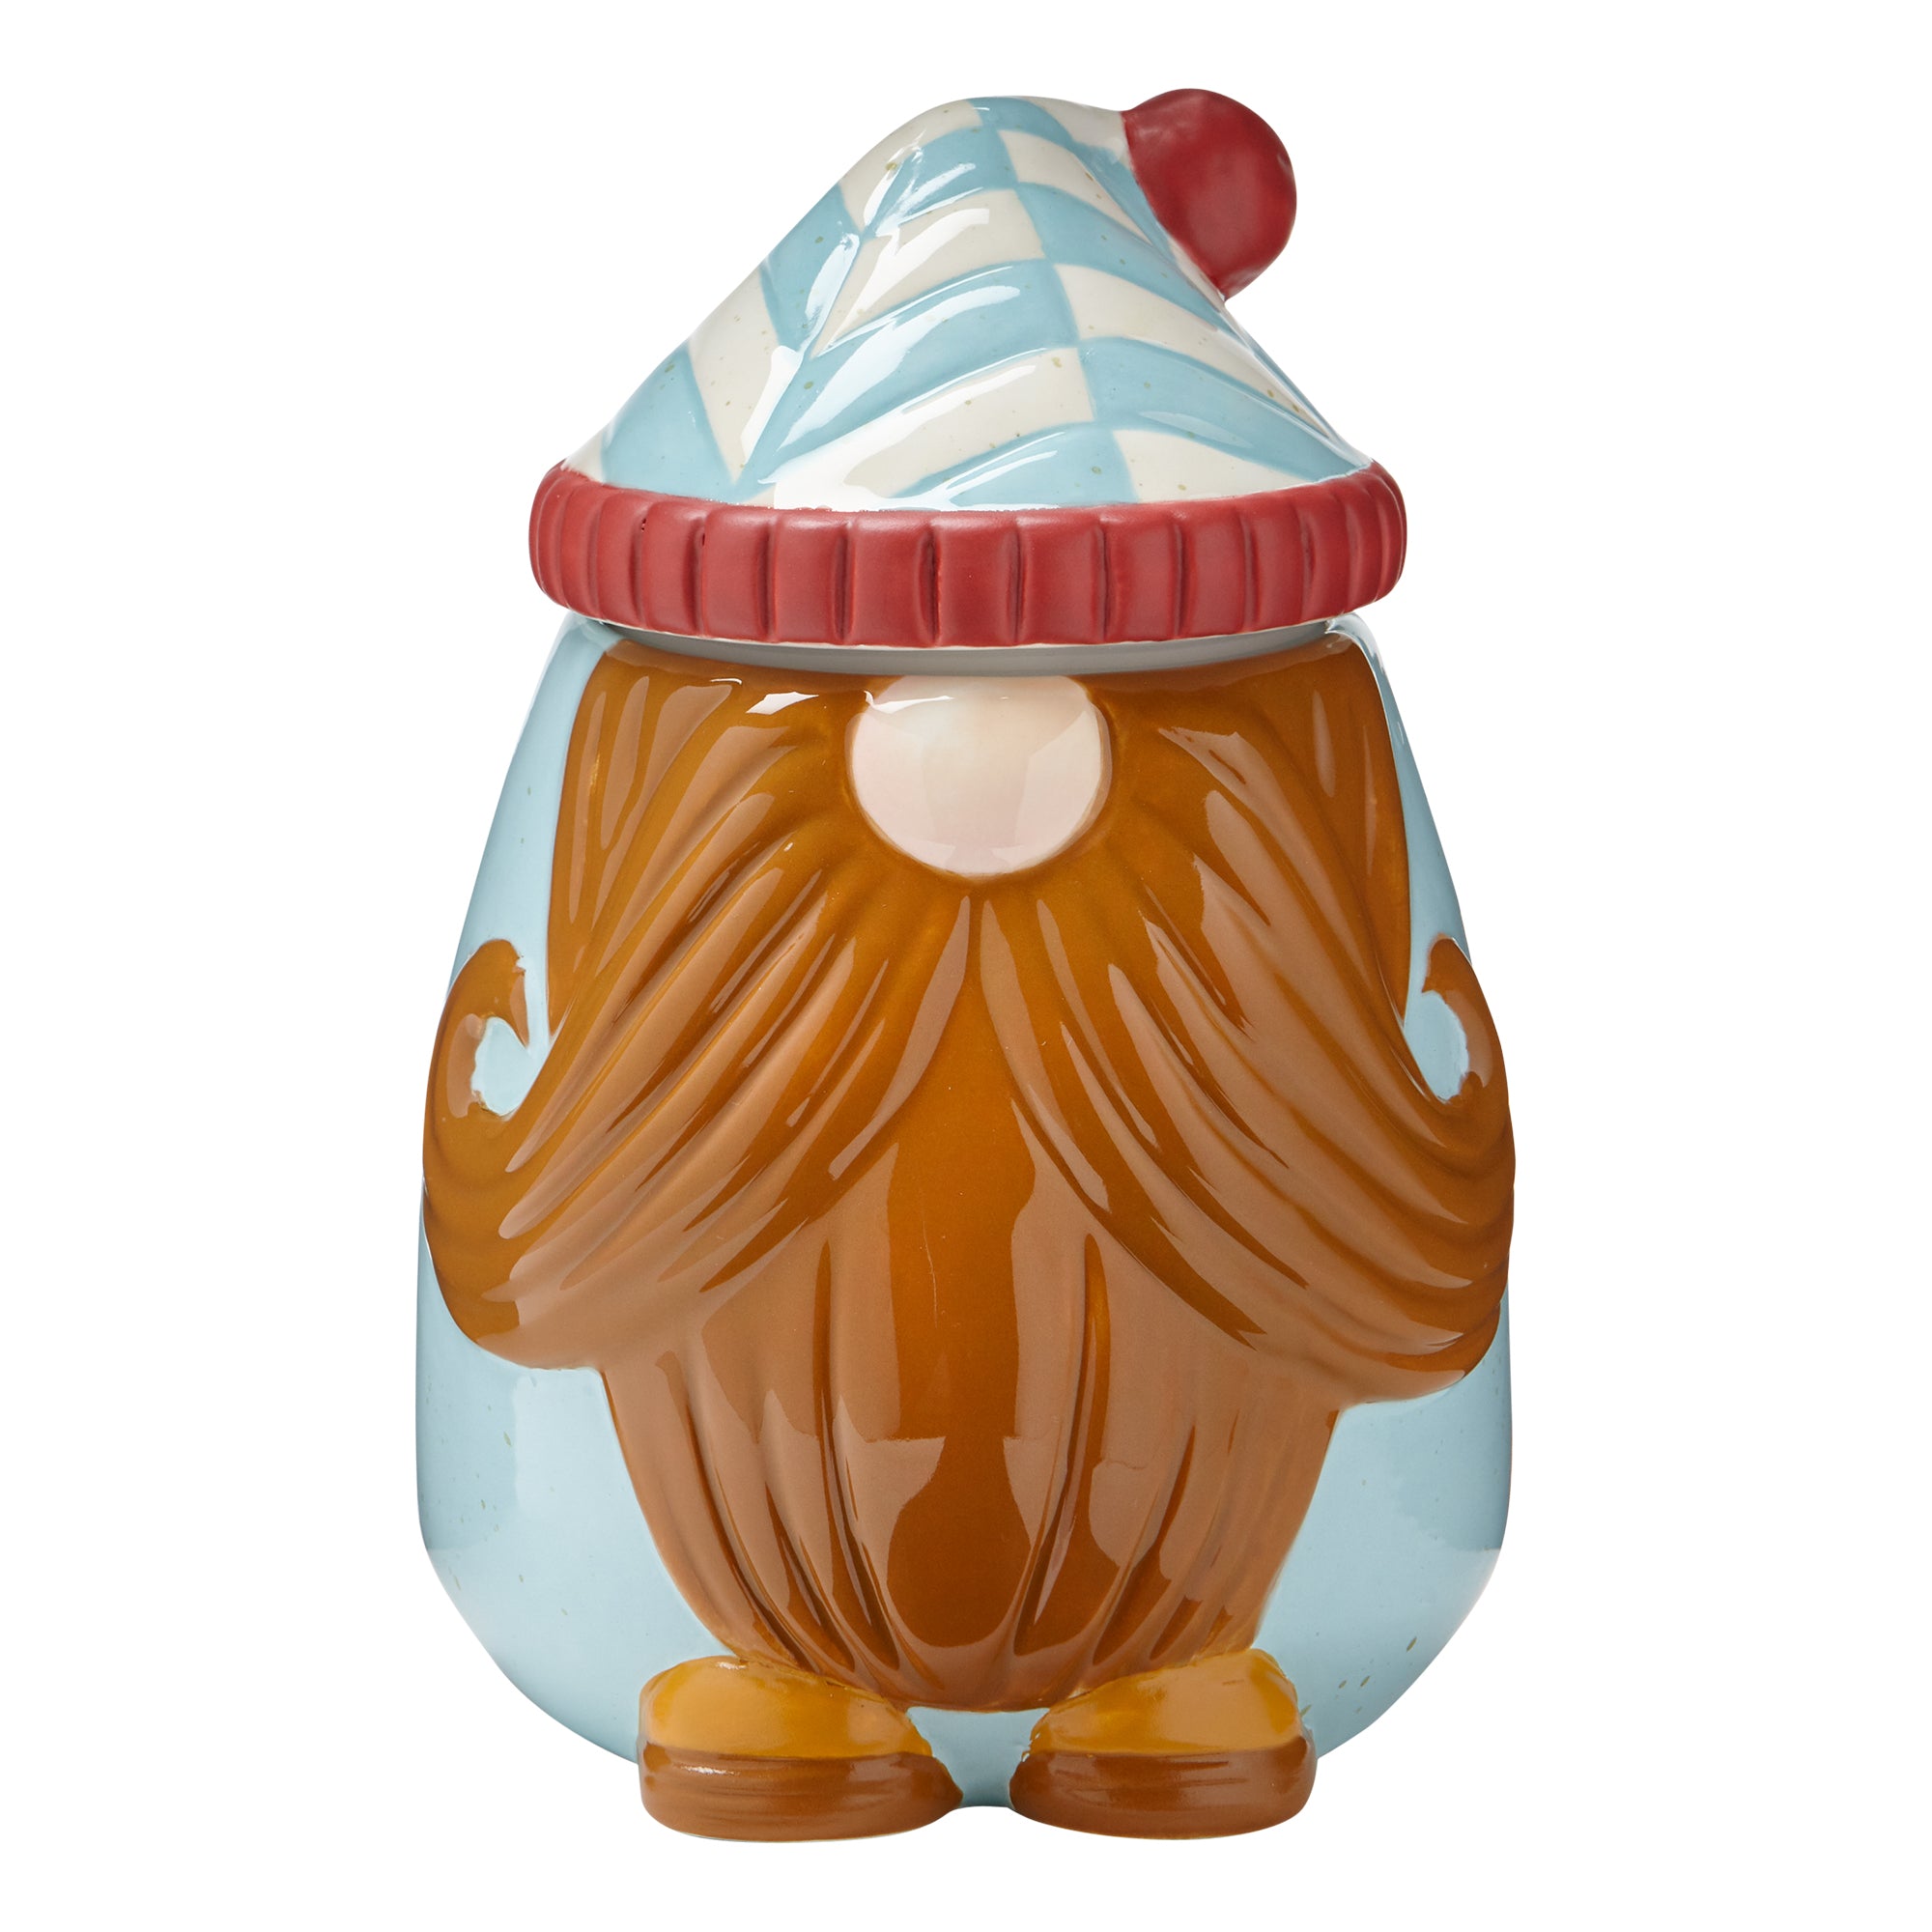 Hans Gnome Stash Container